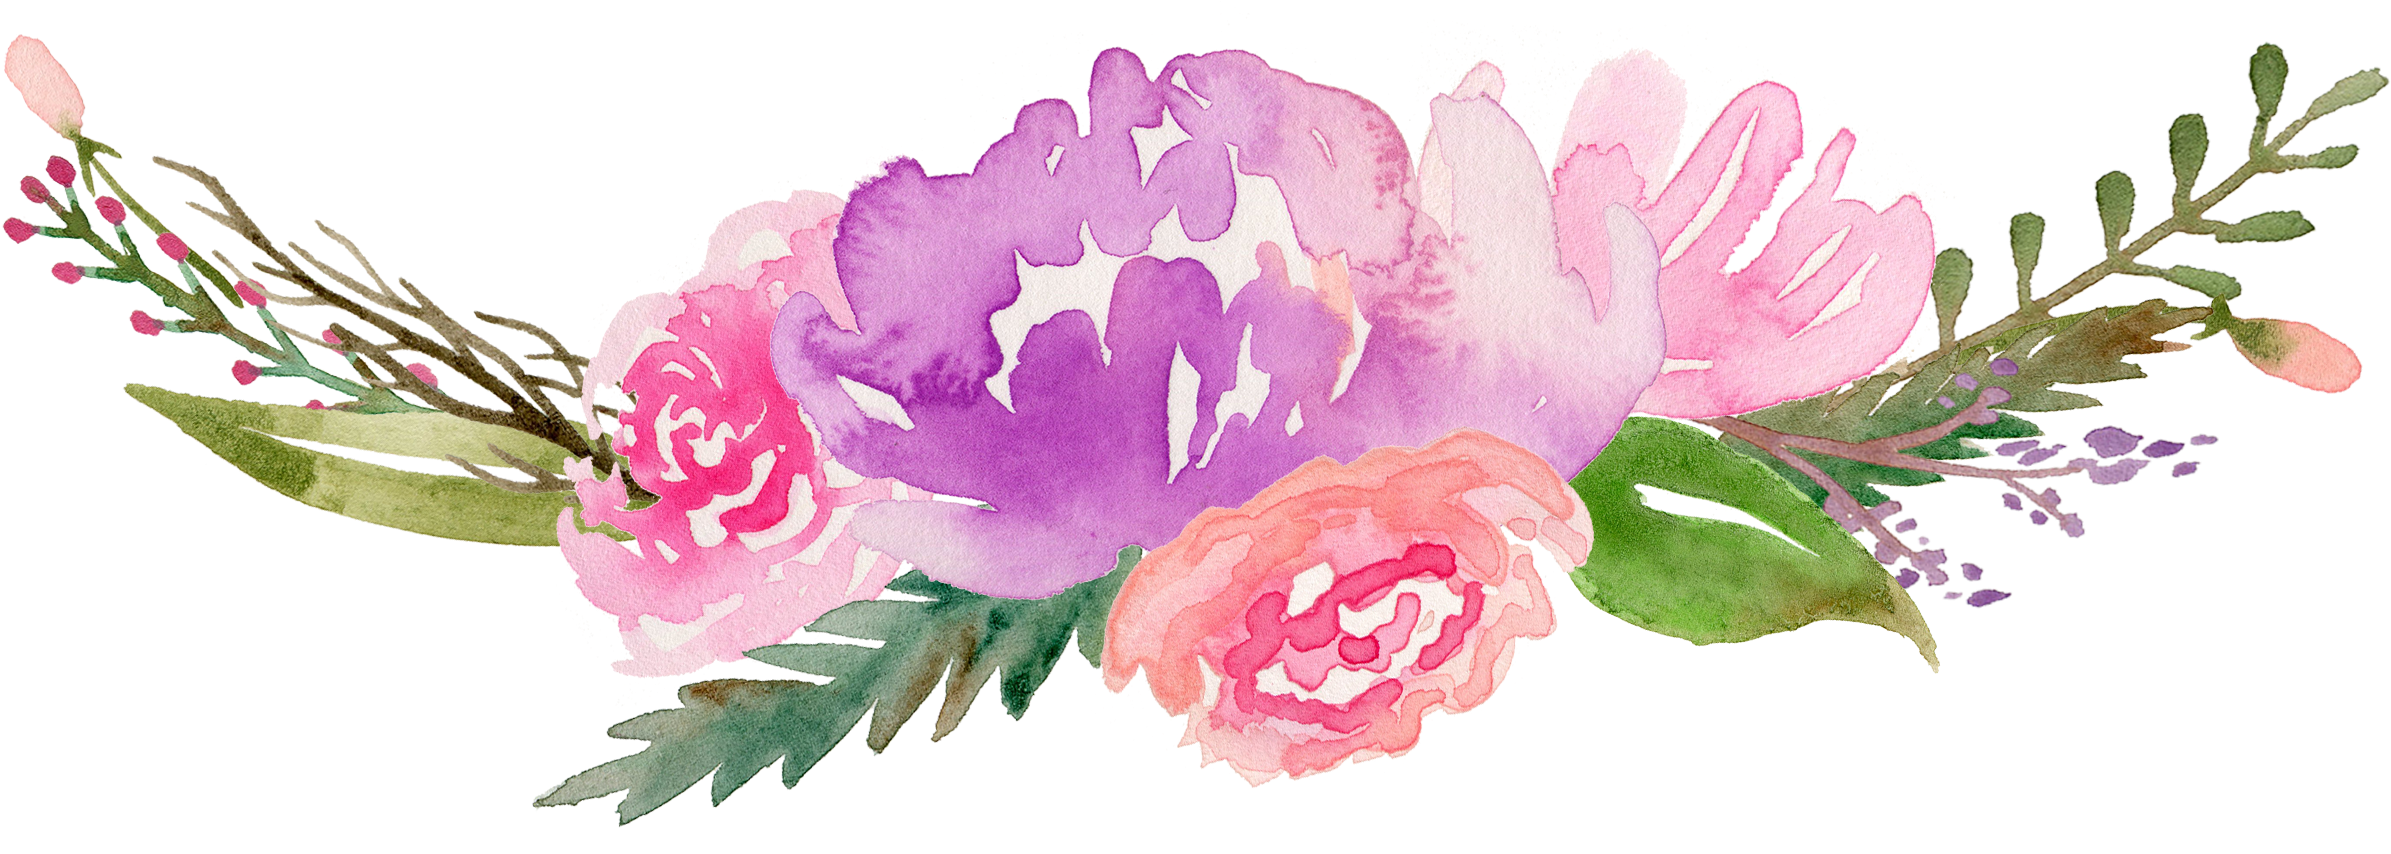 Flower watercolor art Pic